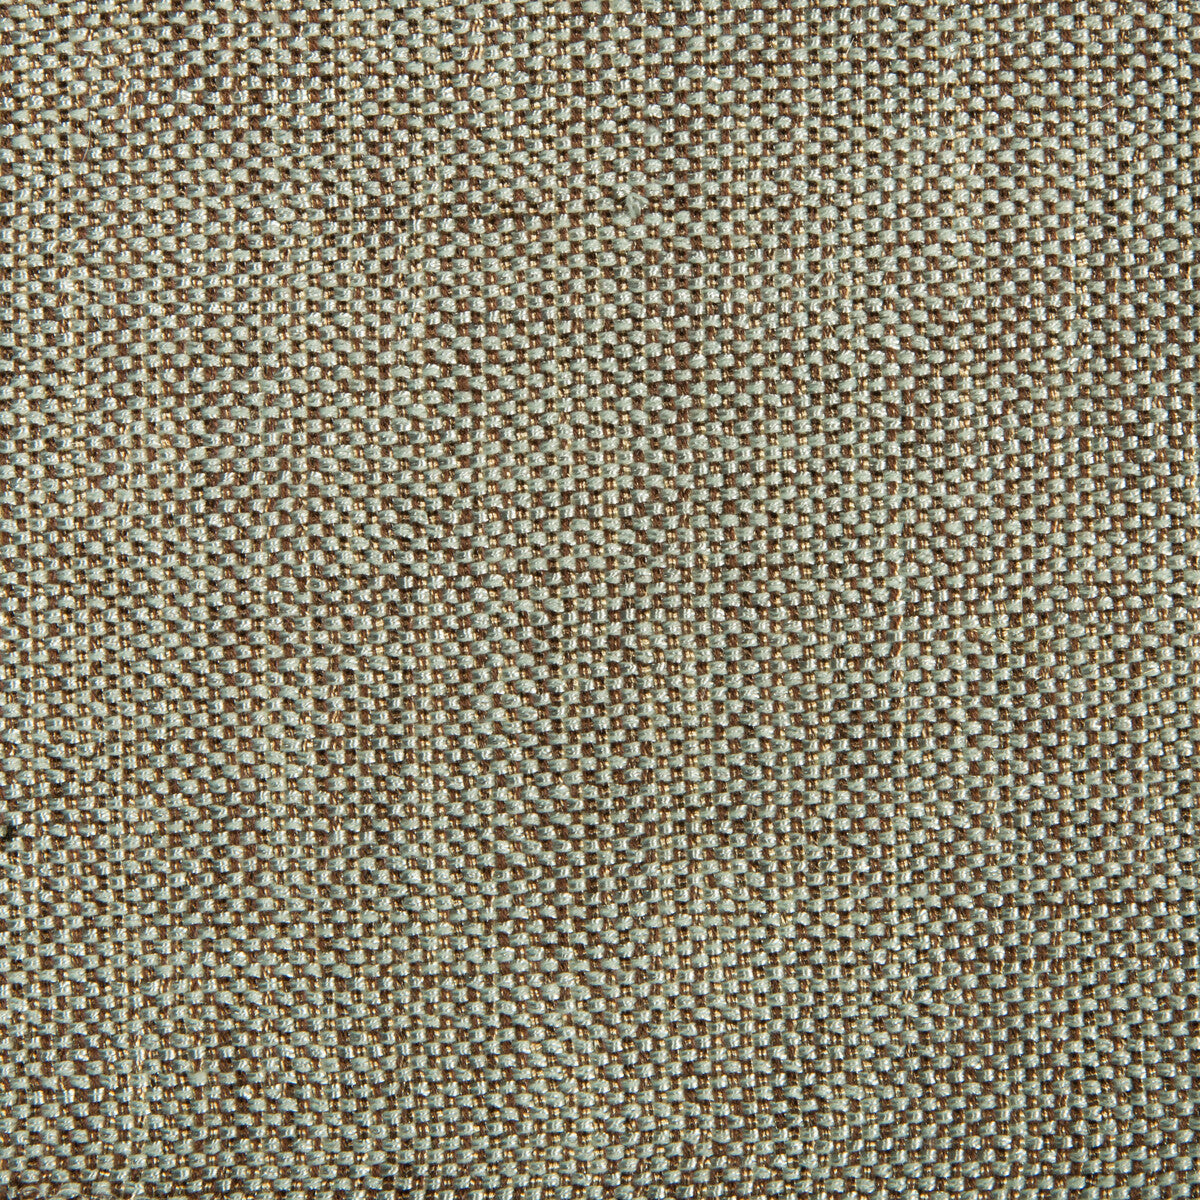 Kravet Smart fabric in 34939-615 color - pattern 34939.615.0 - by Kravet Smart